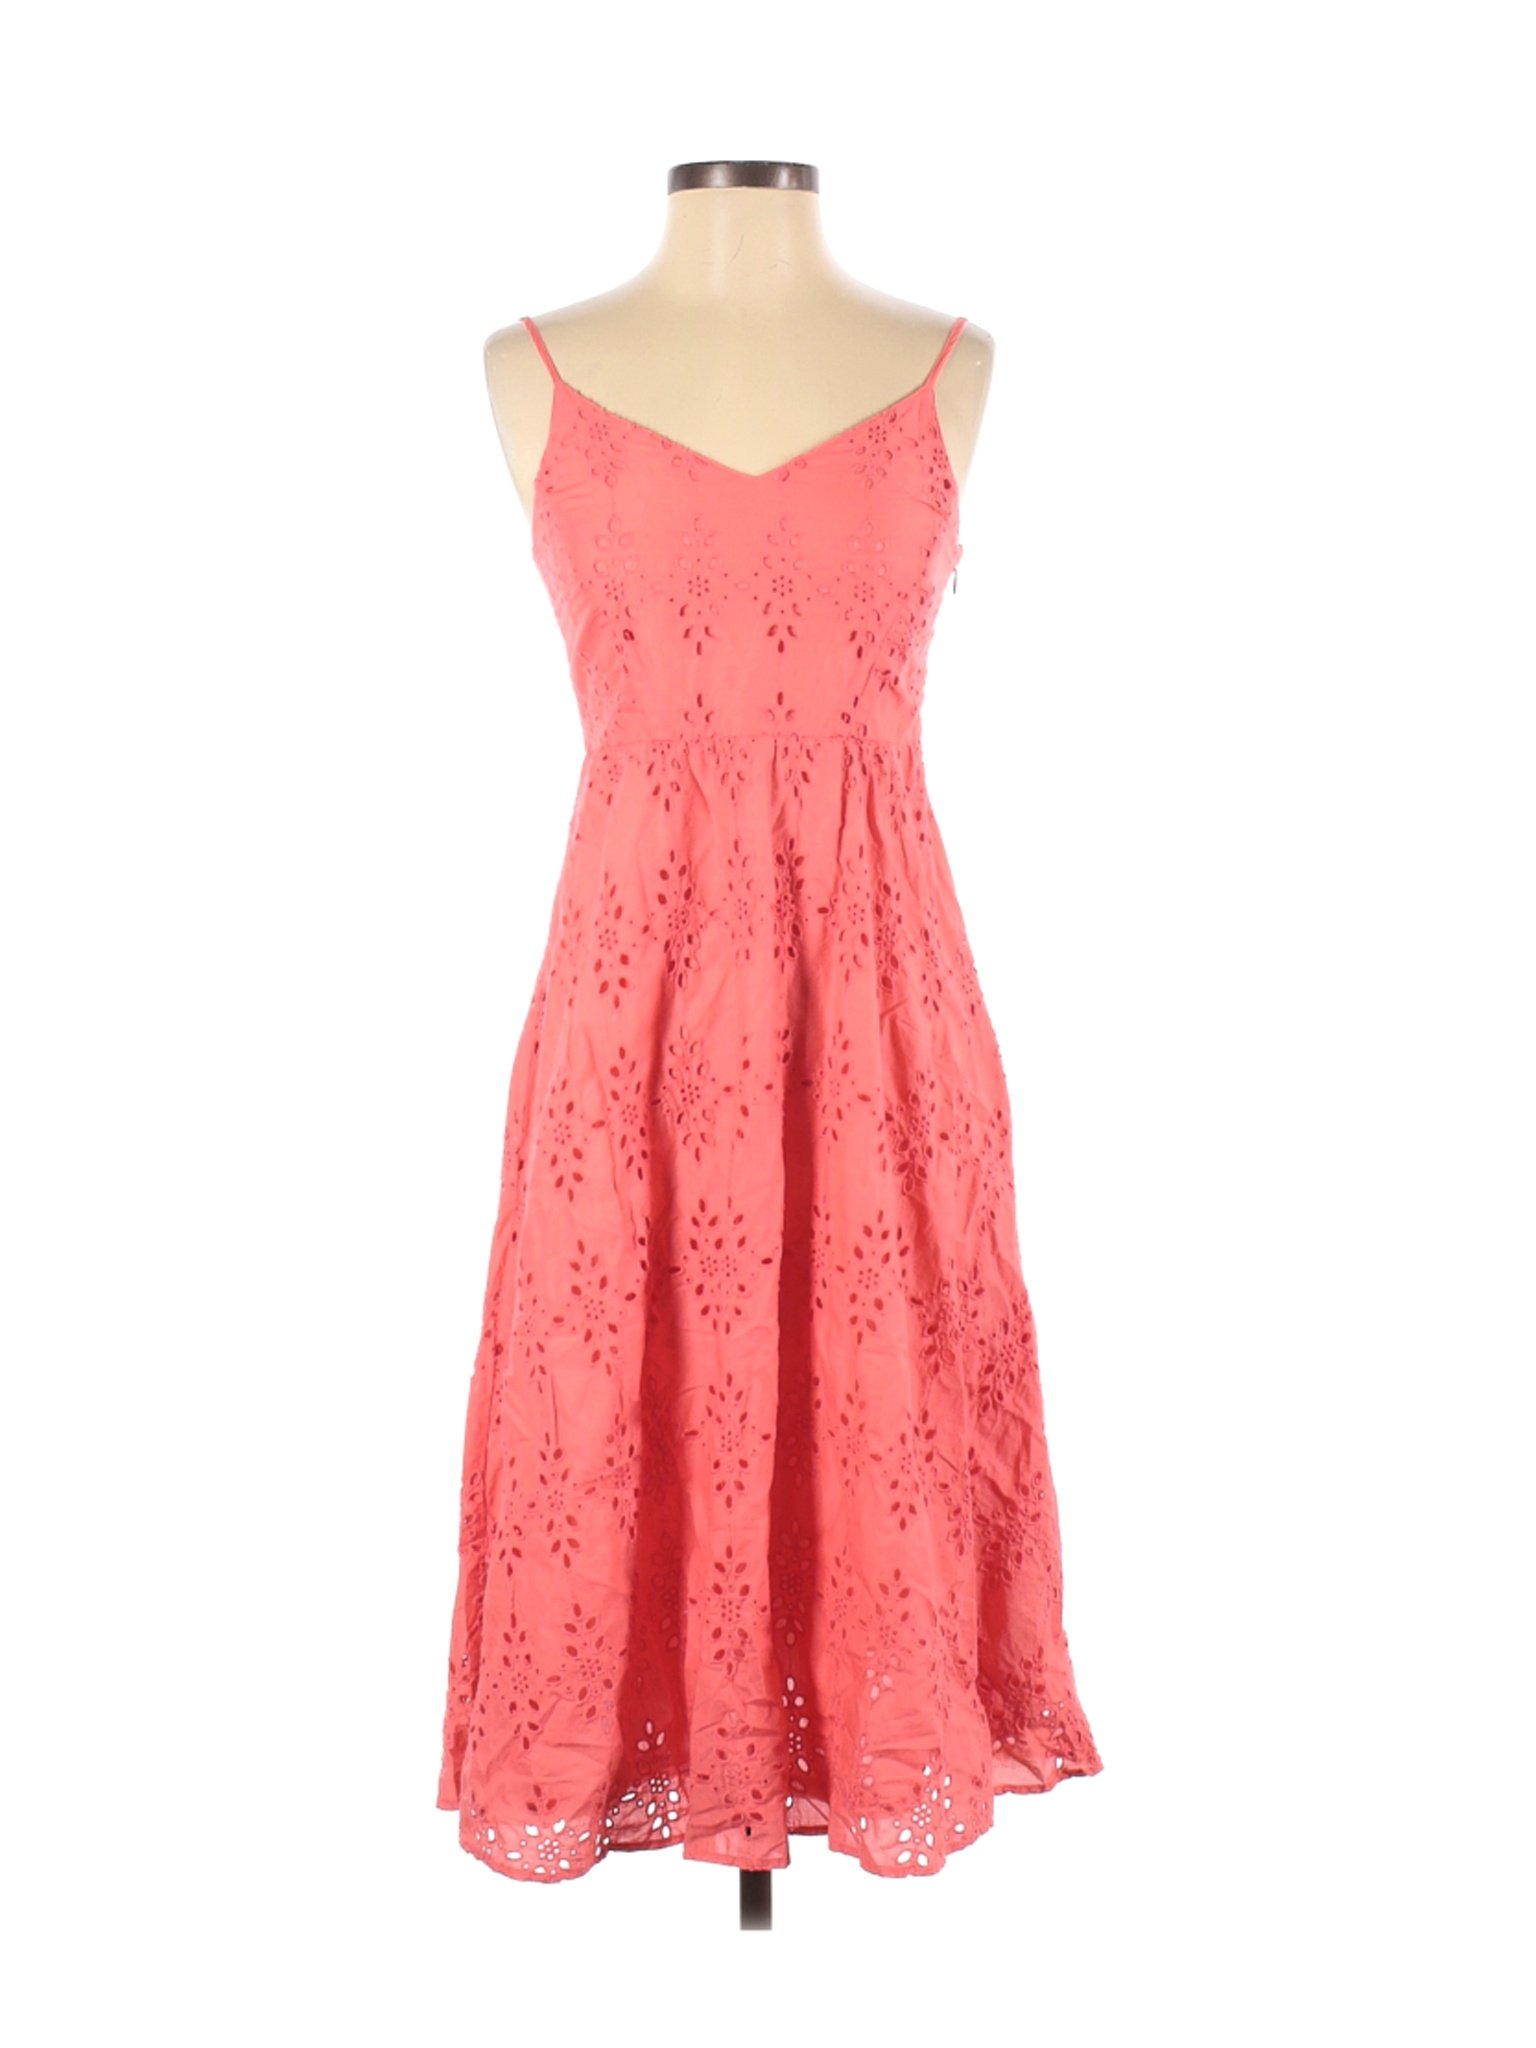 Old Navy Women Pink Casual Dress XS Petites | eBay